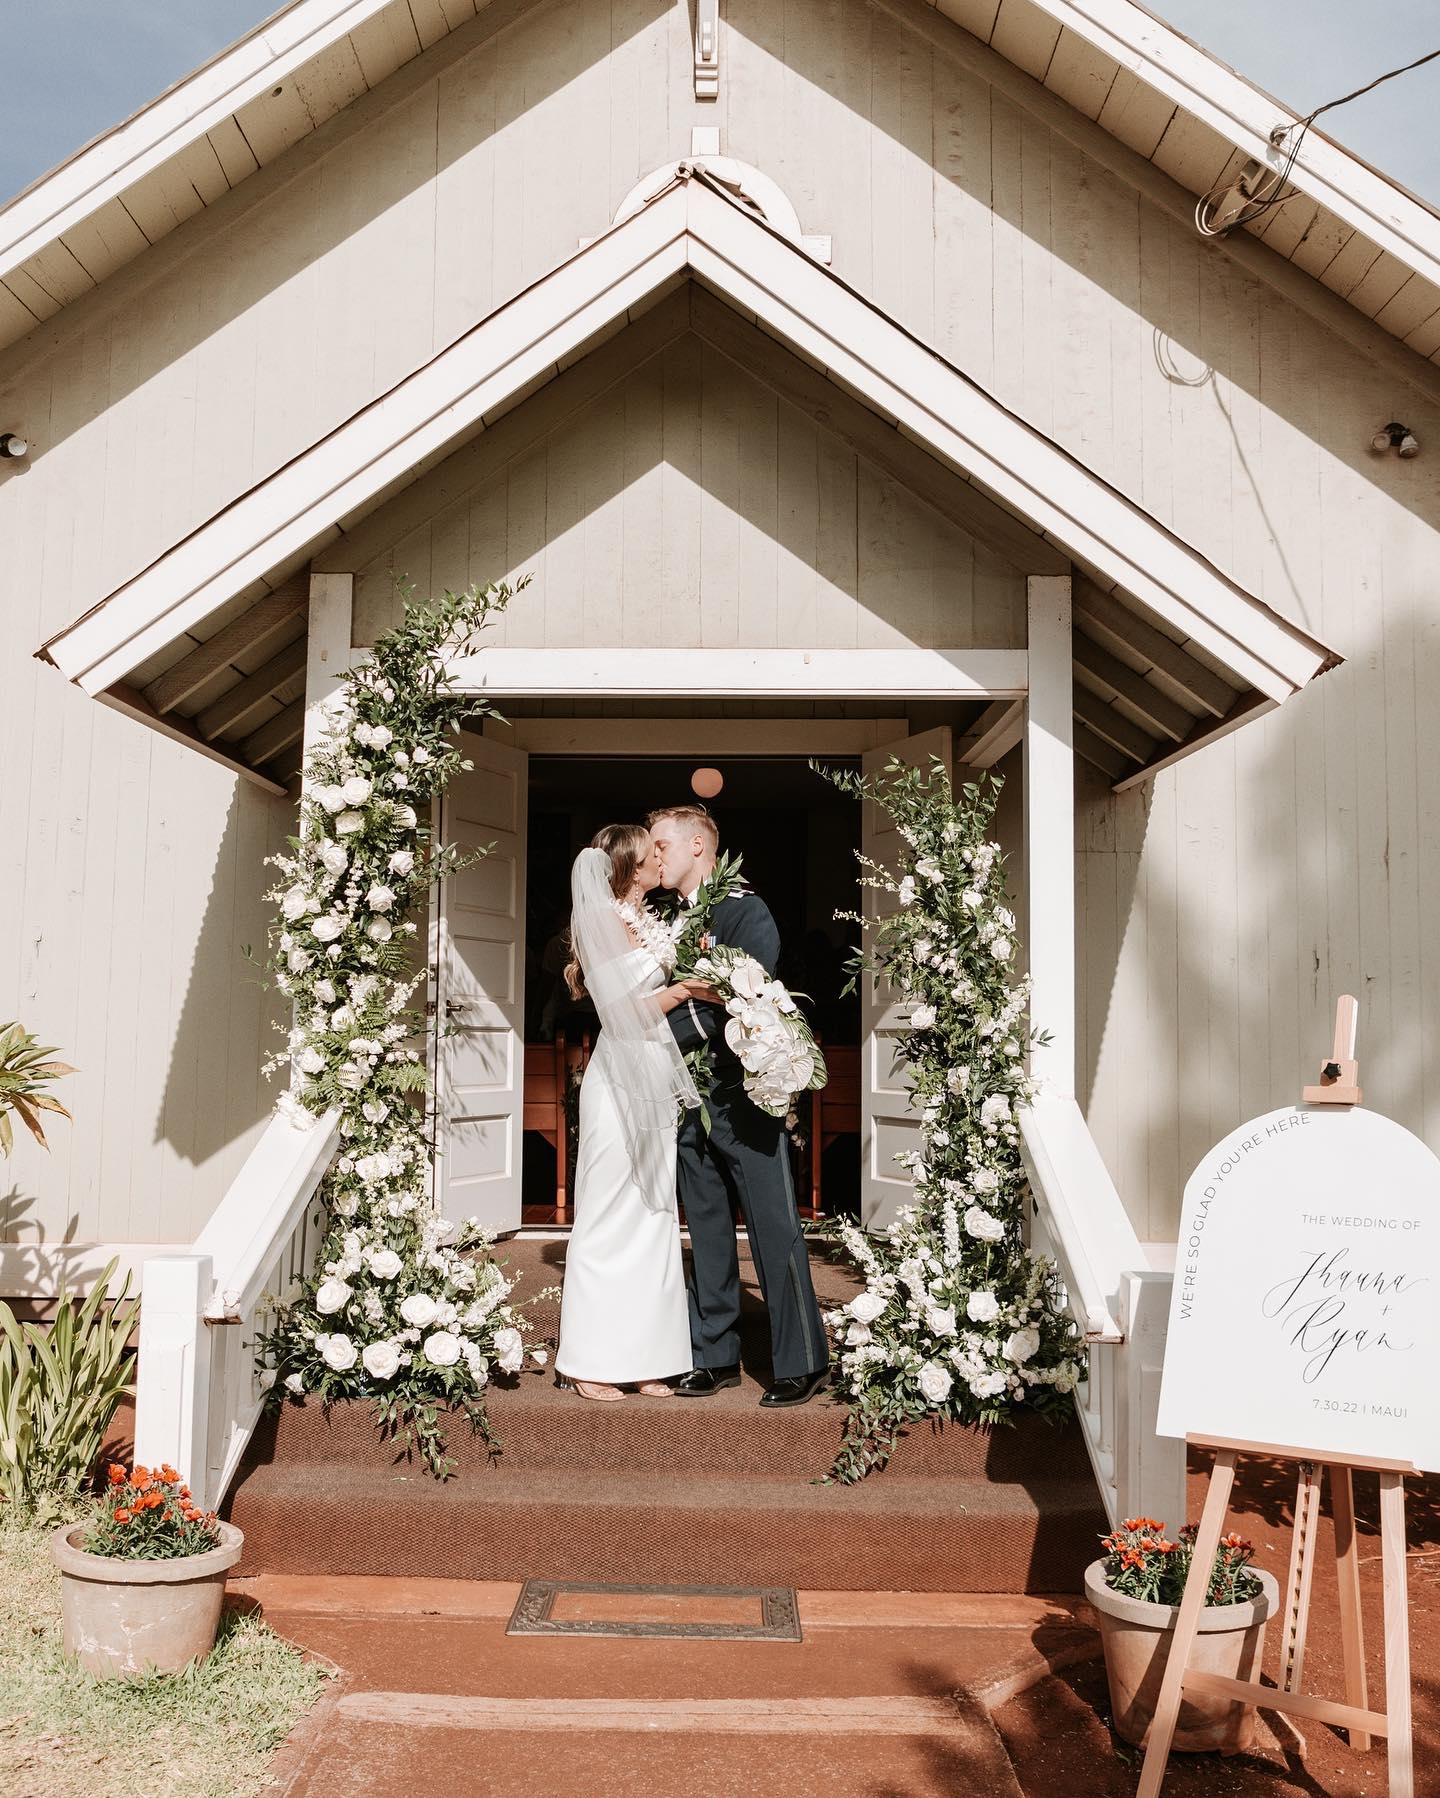 “For I can’t help falling in love with you” - Elvis Presley 
PC: @sierrabertiniphotography
Florist: @sunyasflowers
Welcome Sign: @Tropigalcalligraphy
Venue: Lahuiokalani Ka’ānapali Congregational Church
•
•
•
•
•
•
•
#mauiweddingplanner #hawaiiweddingplanner #weddingplanner #weddingvenue #mauiwedding #destinationwedding #bride #groom #ido #love